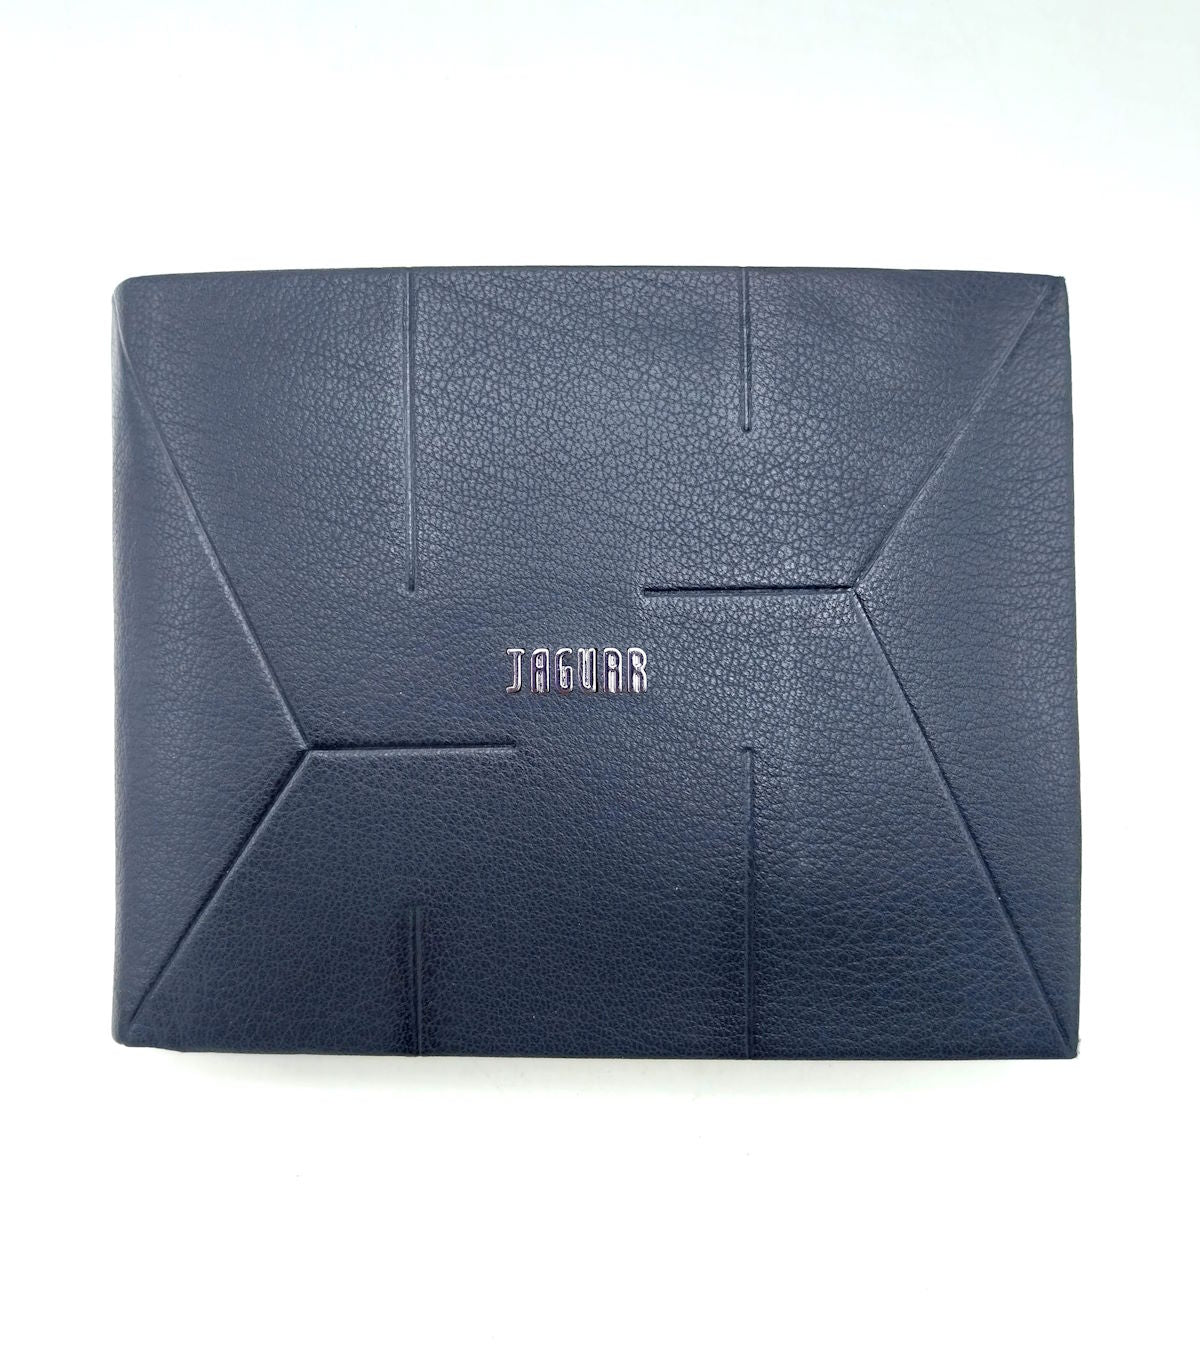 Genuine leather wallet, Jaguar, art. pf806-1